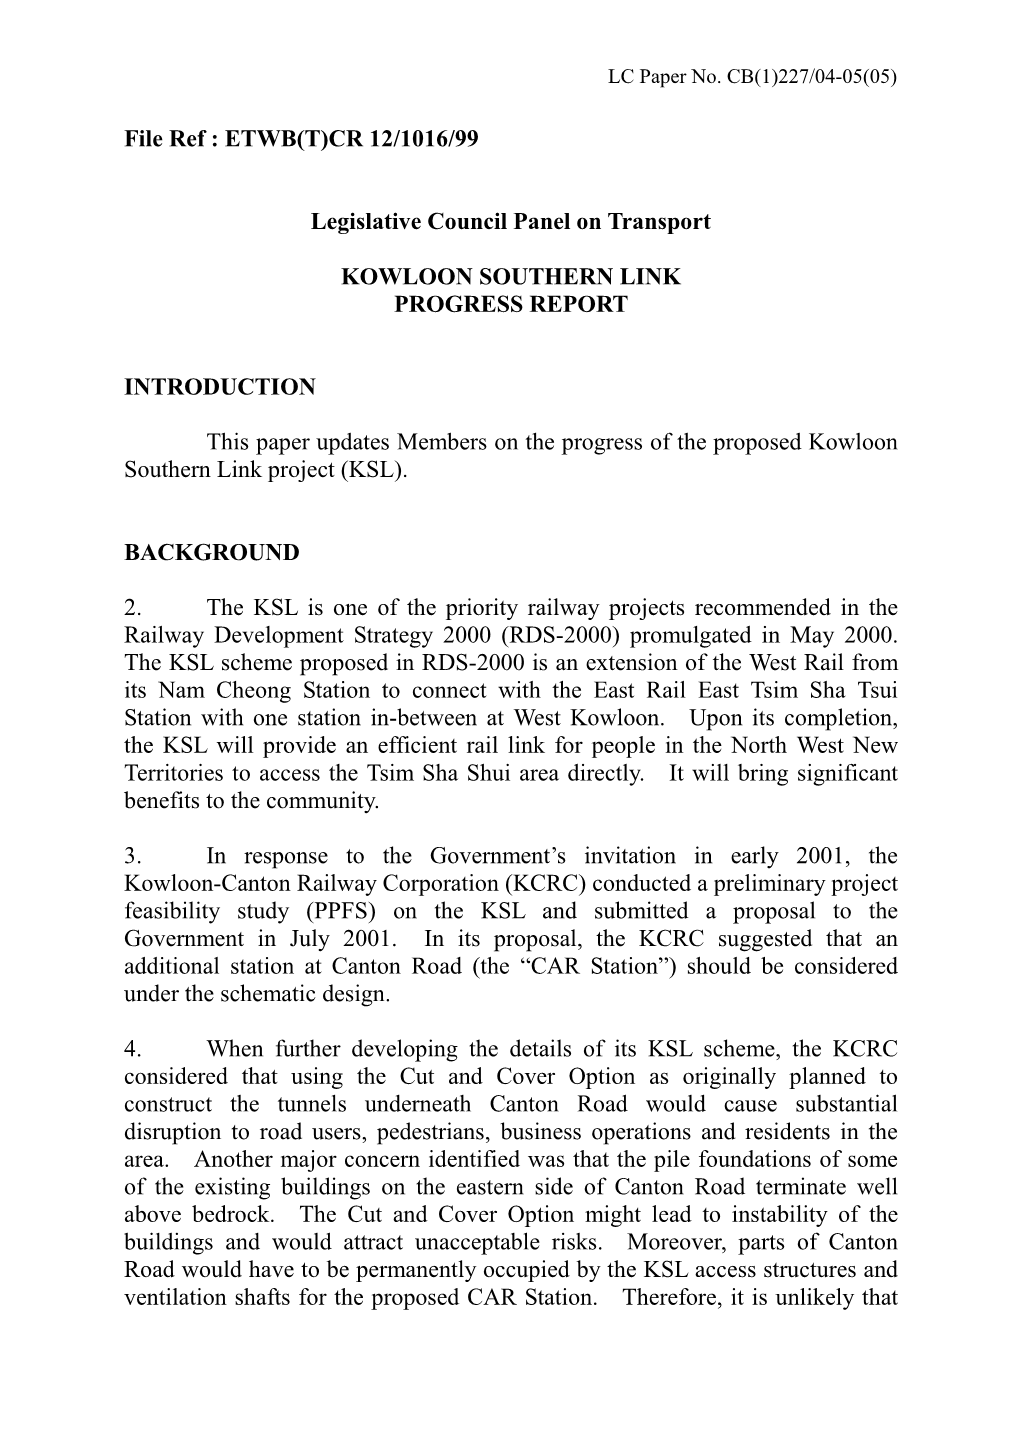 Kowloon Southern Link Progress Report